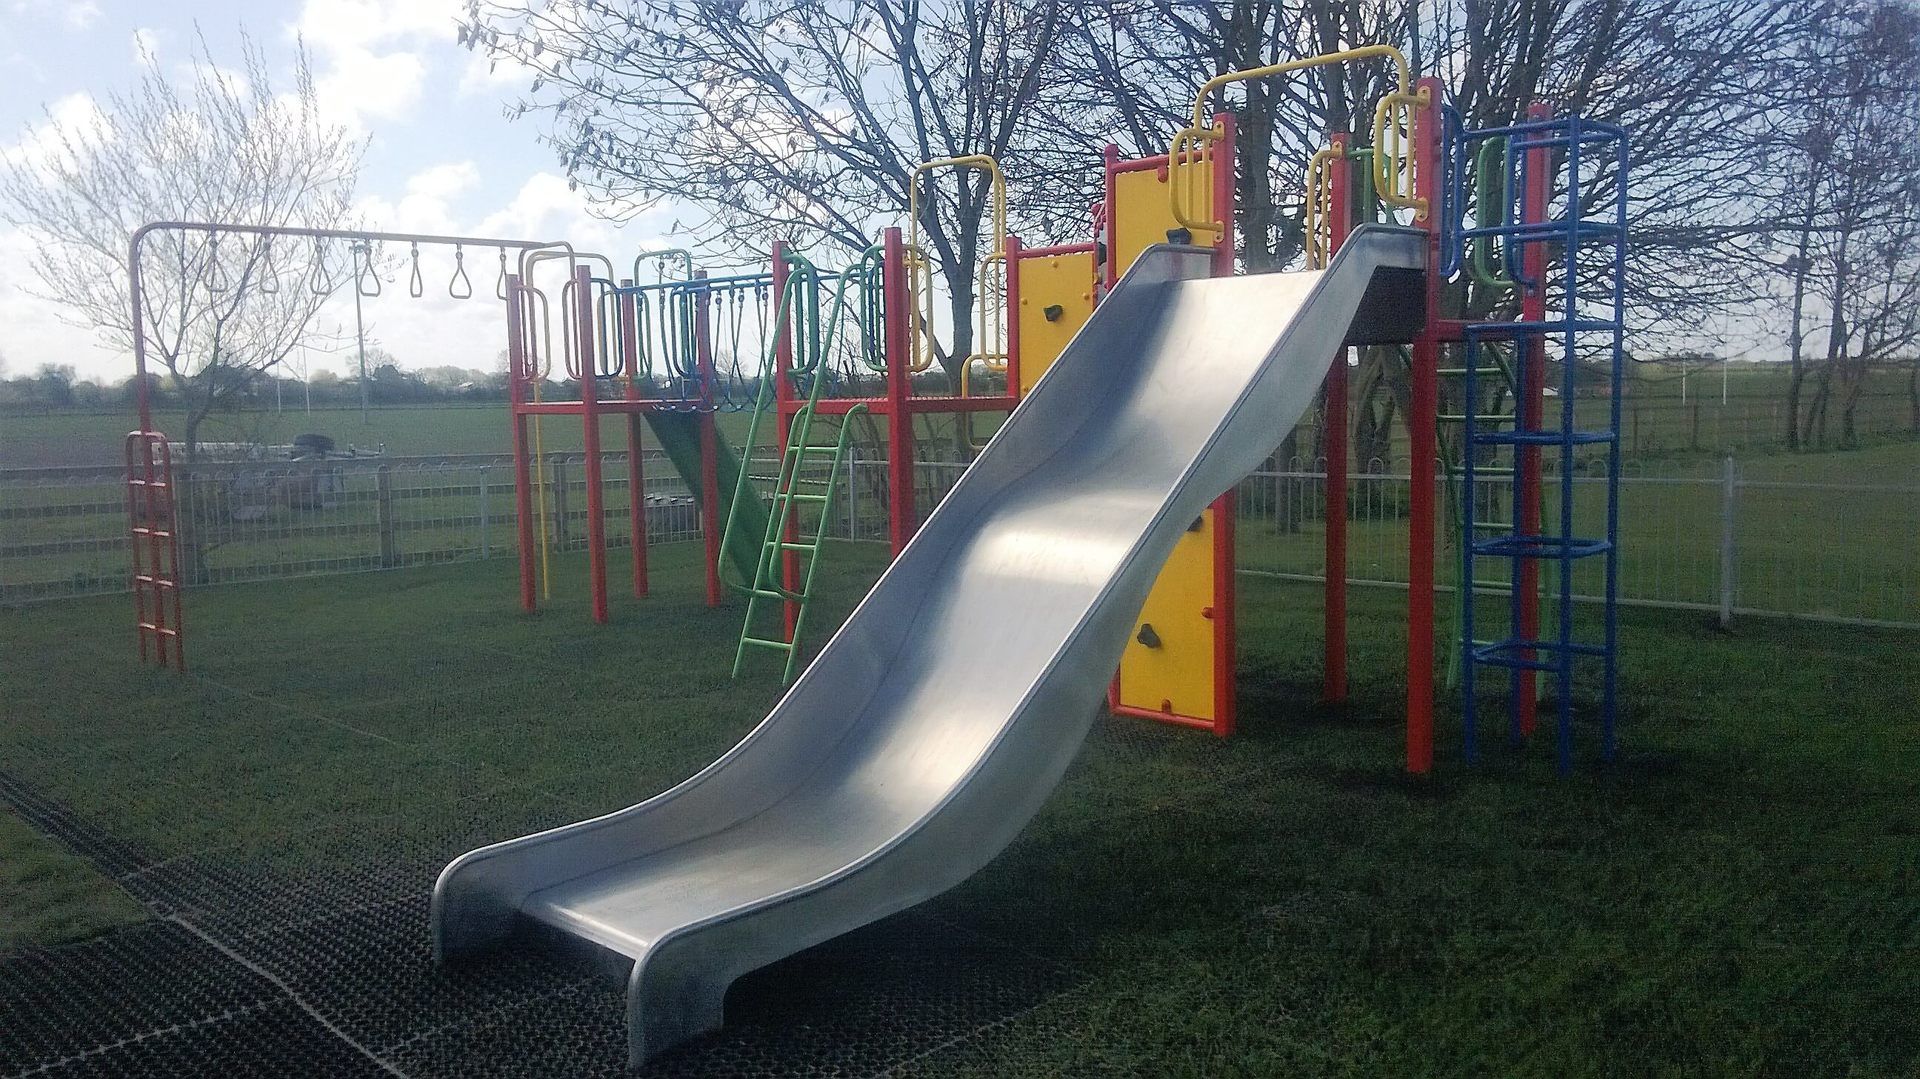 Playground Slide on Rubber Matting